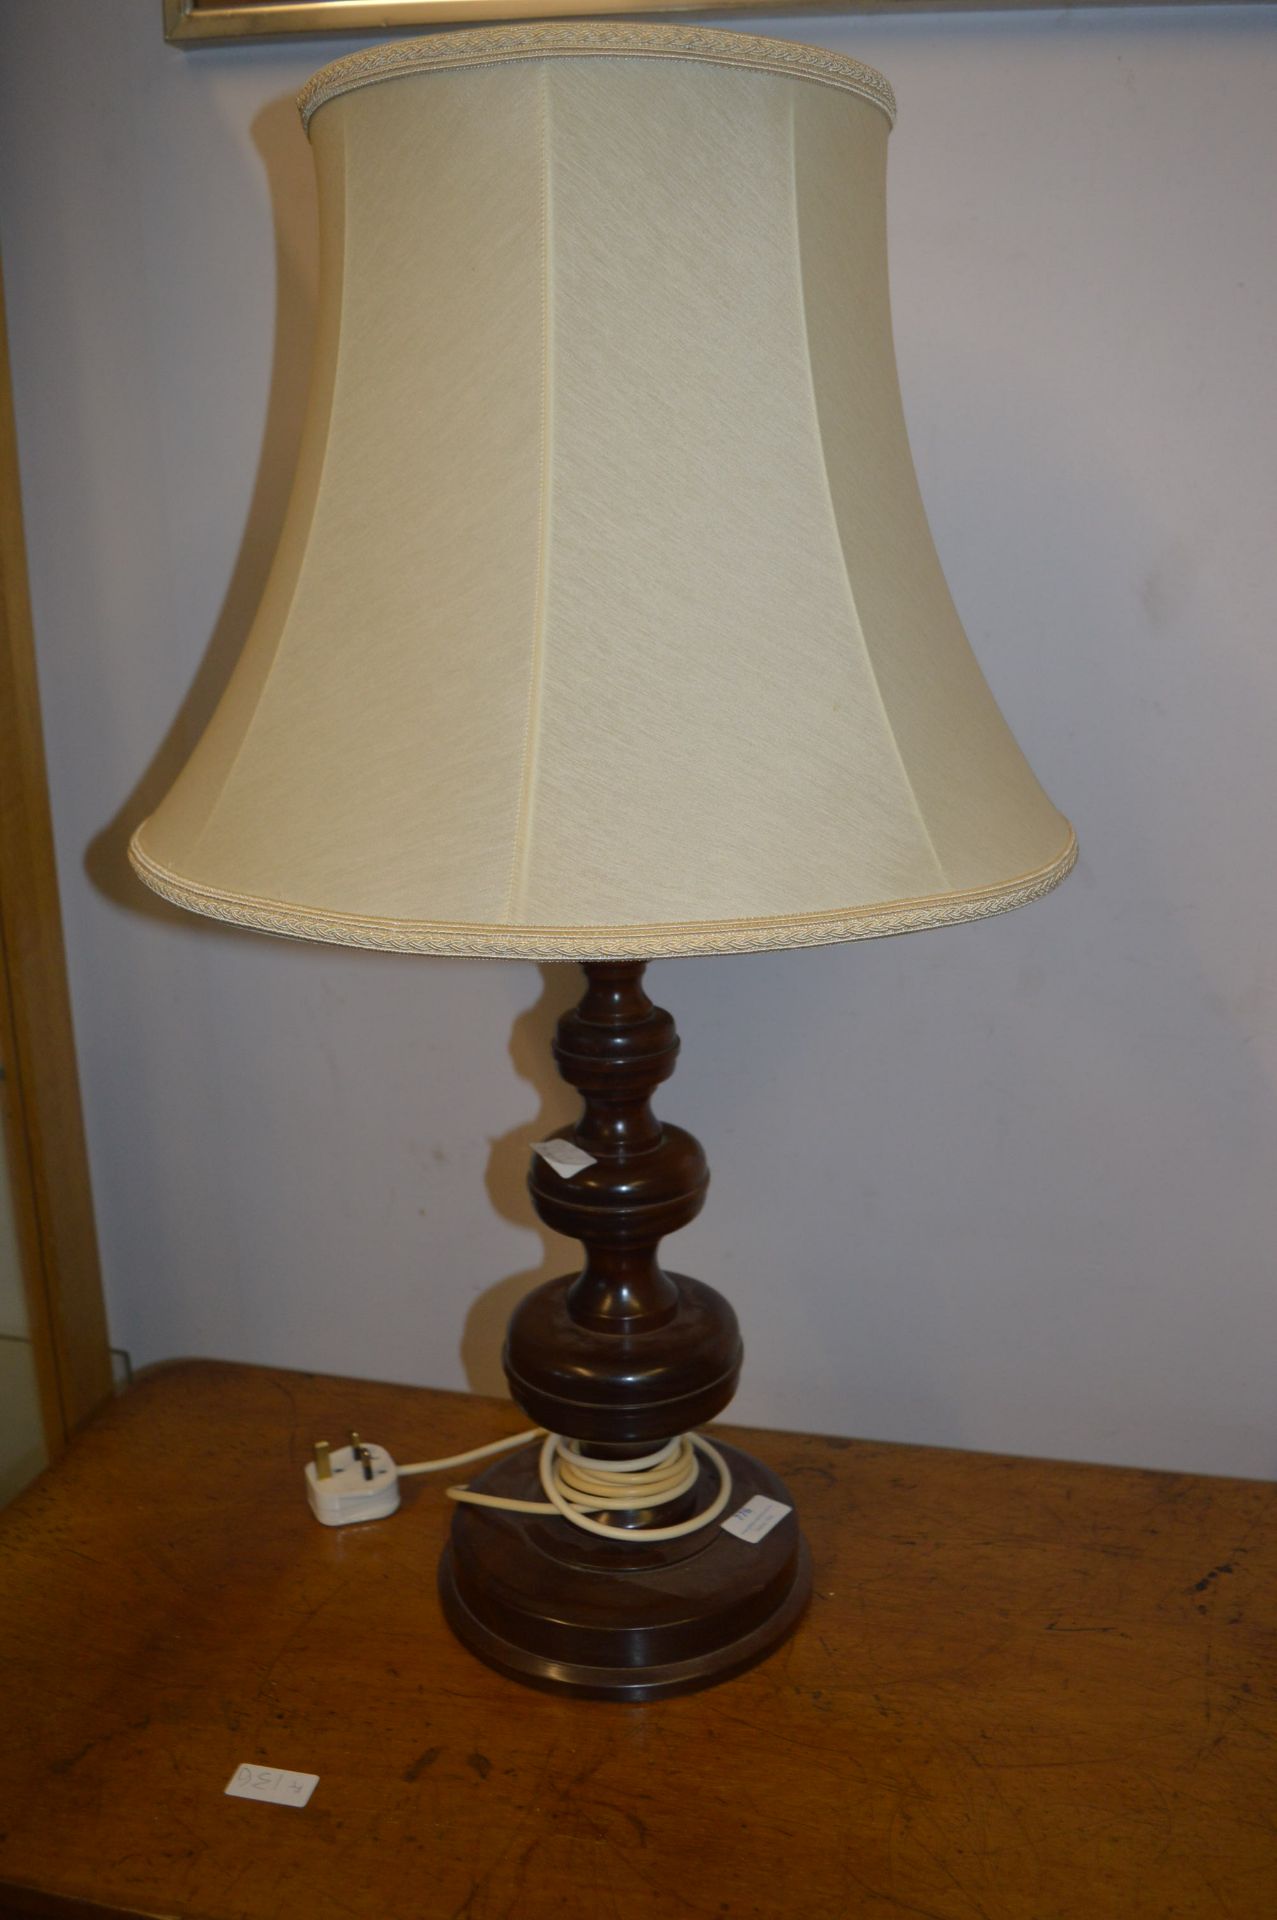 Mahogany Table Lamp with Shade